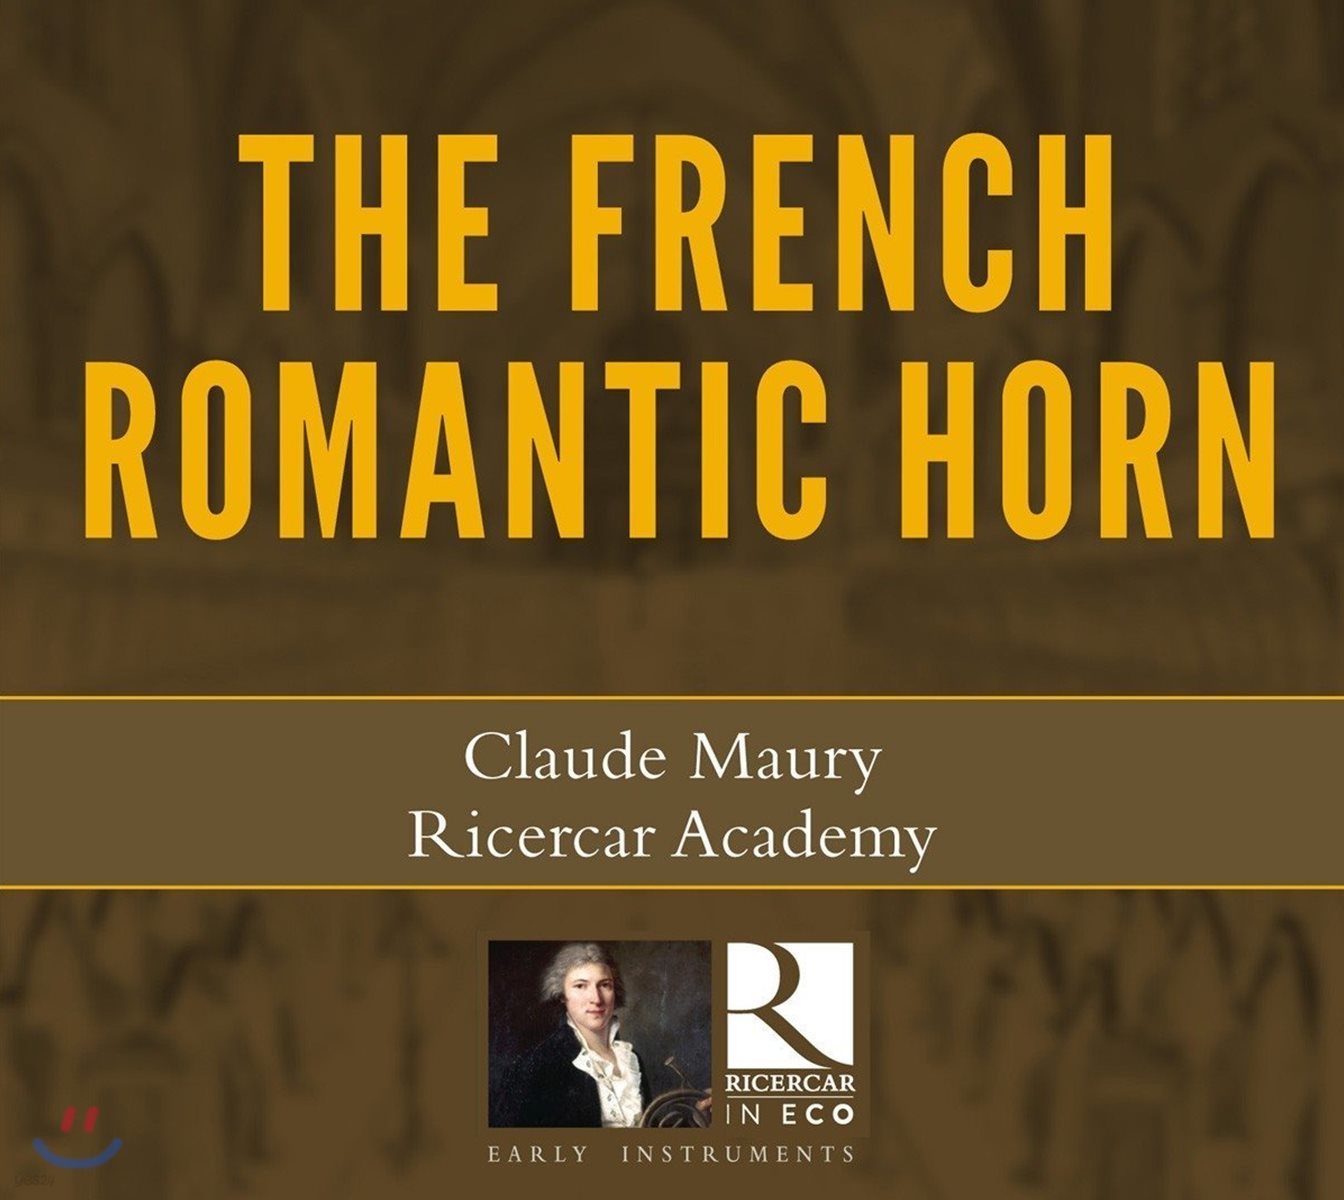 Claude Maury 프랑스 로맨틱 호른 작품집 (The French Romantic Horn)